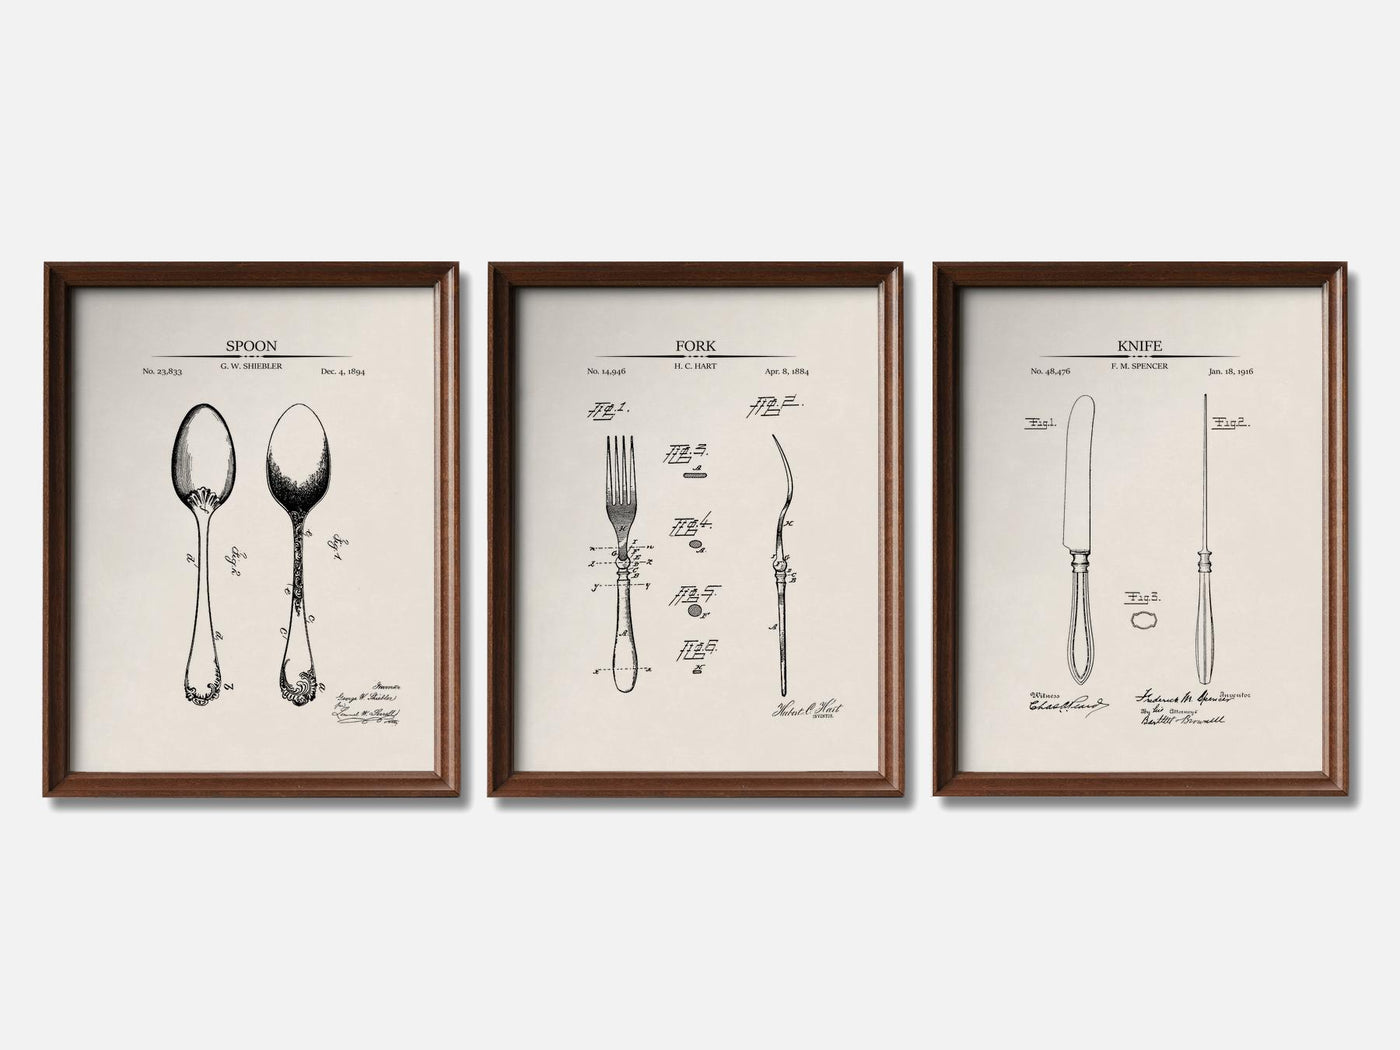 Dining Room Patent Print Set of 3 mockup - A_t10021-V1-PC_F+WA-SS_3-PS_11x14-C_ivo variant